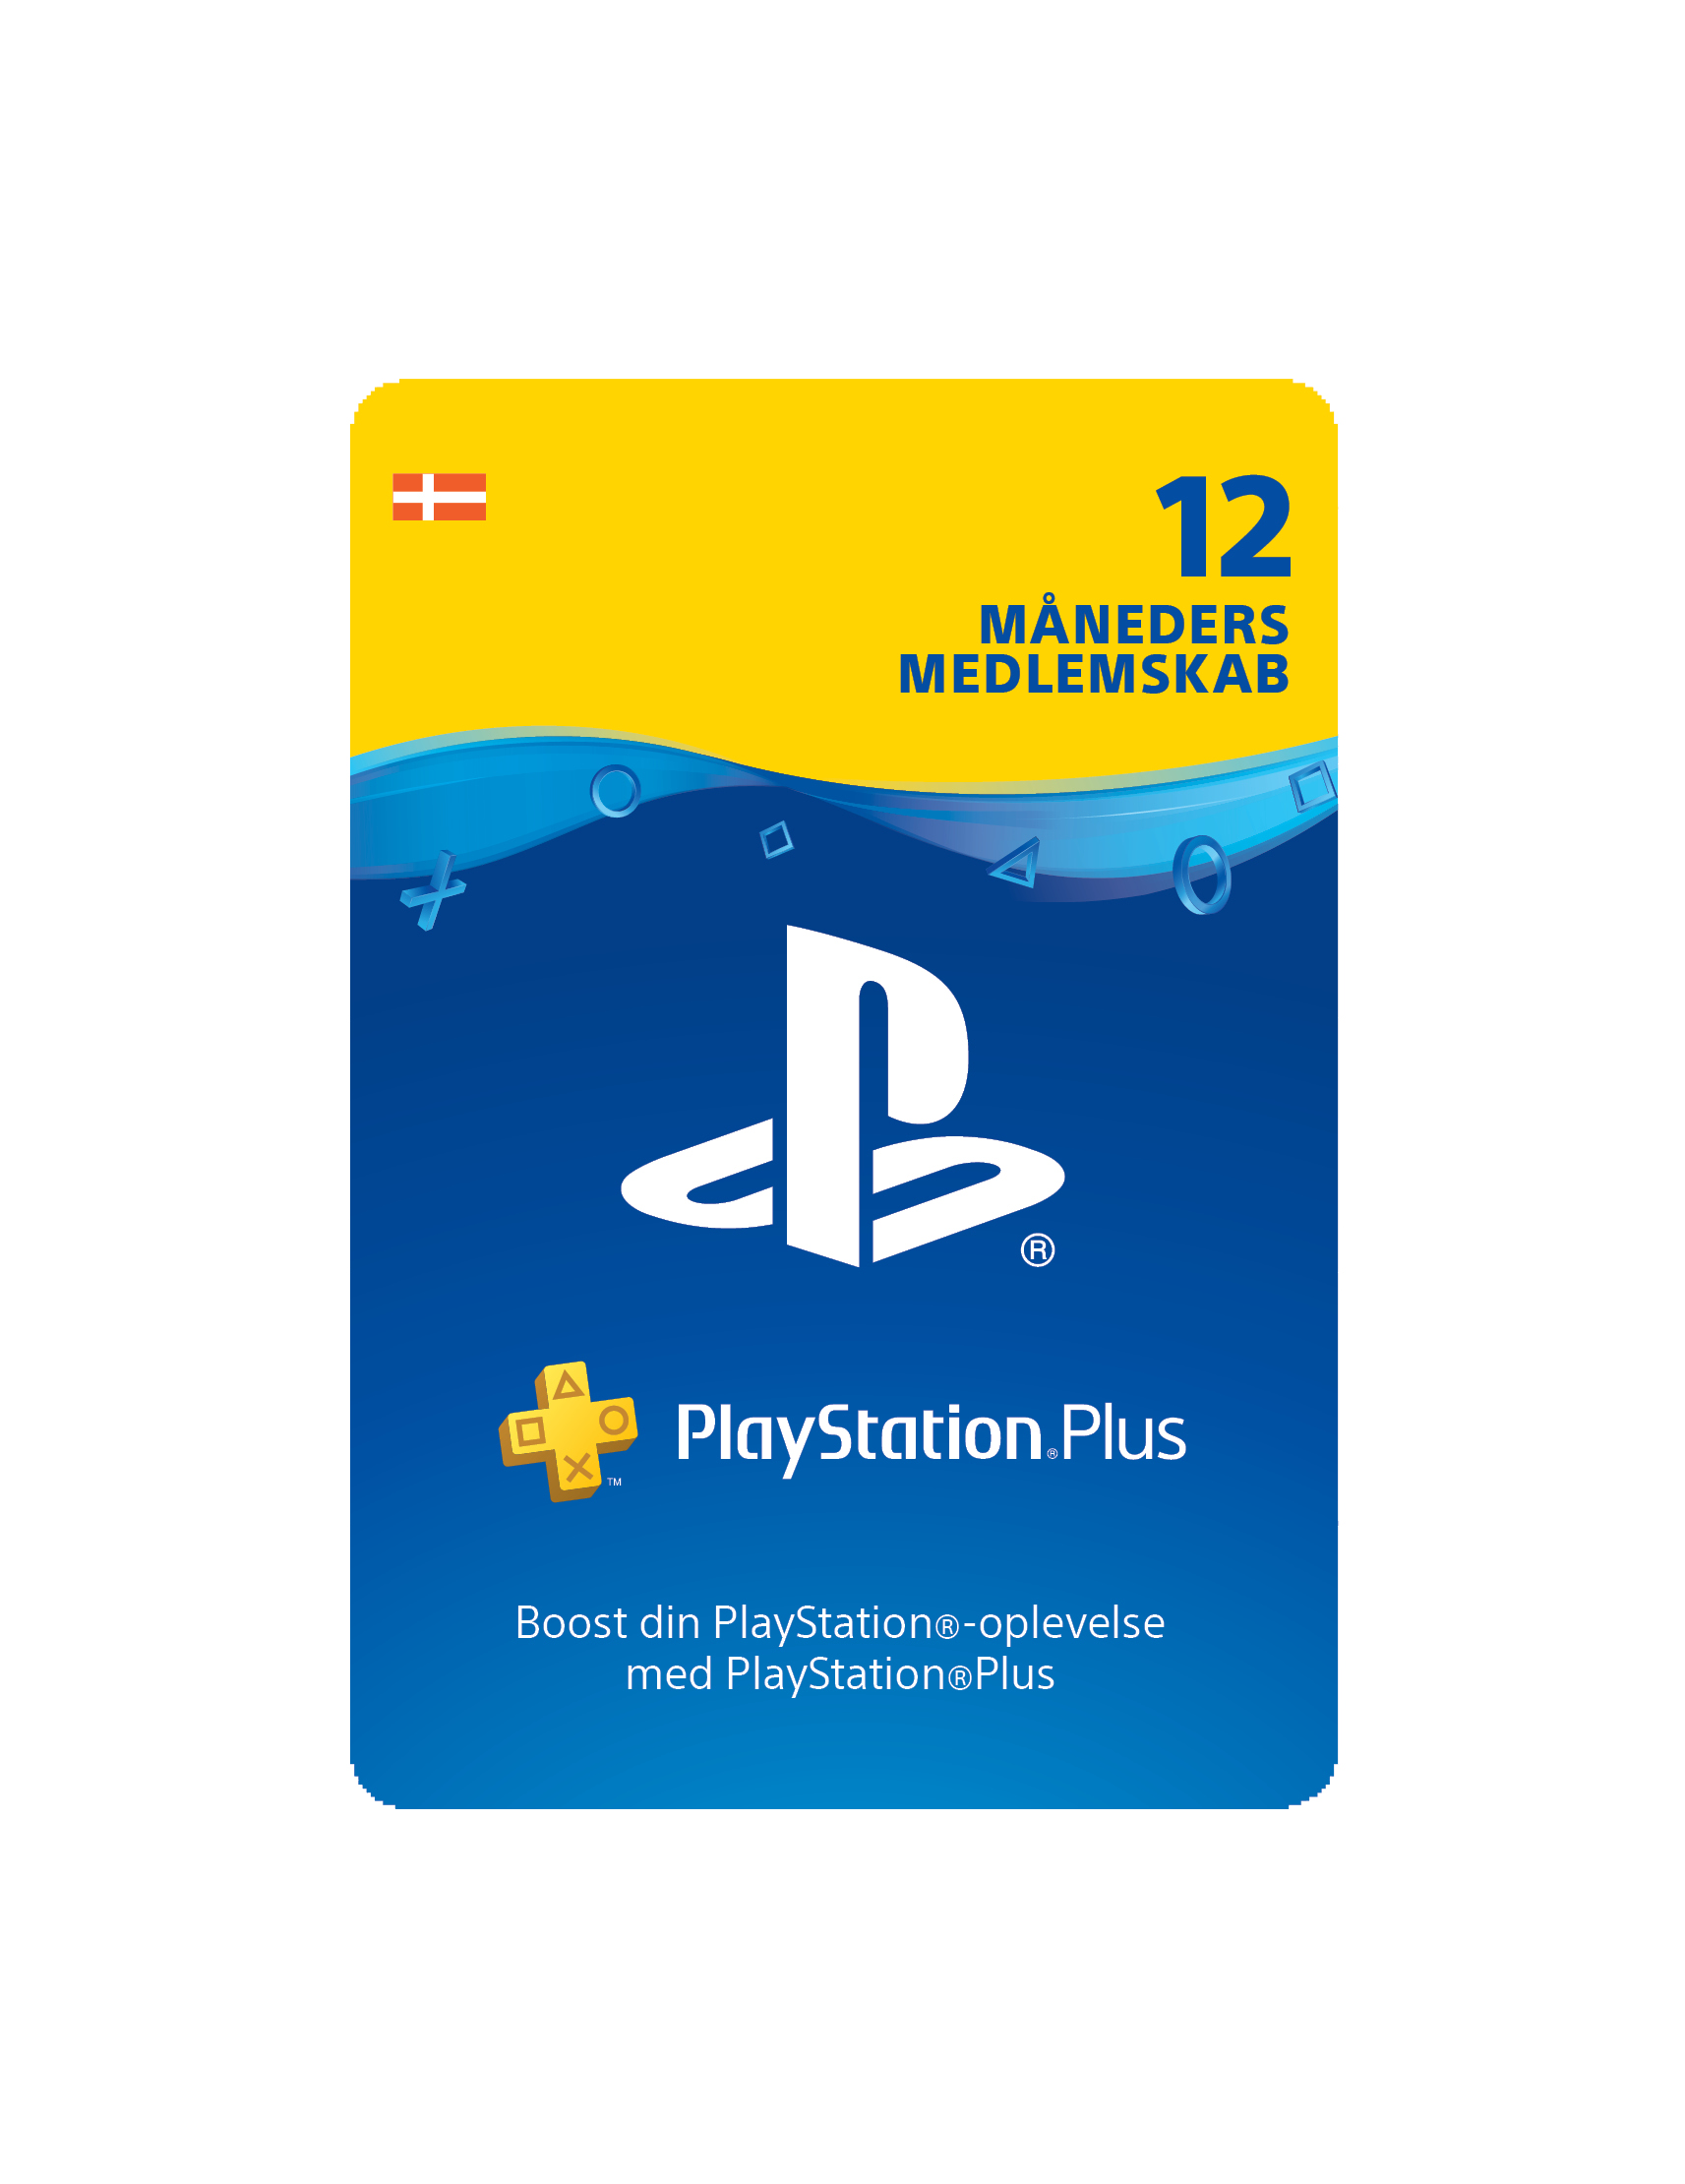 Resignation dine kassette Kjøp PSN Plus Card 12m Subscription DK (PS3/PS4/PS5/Vita)